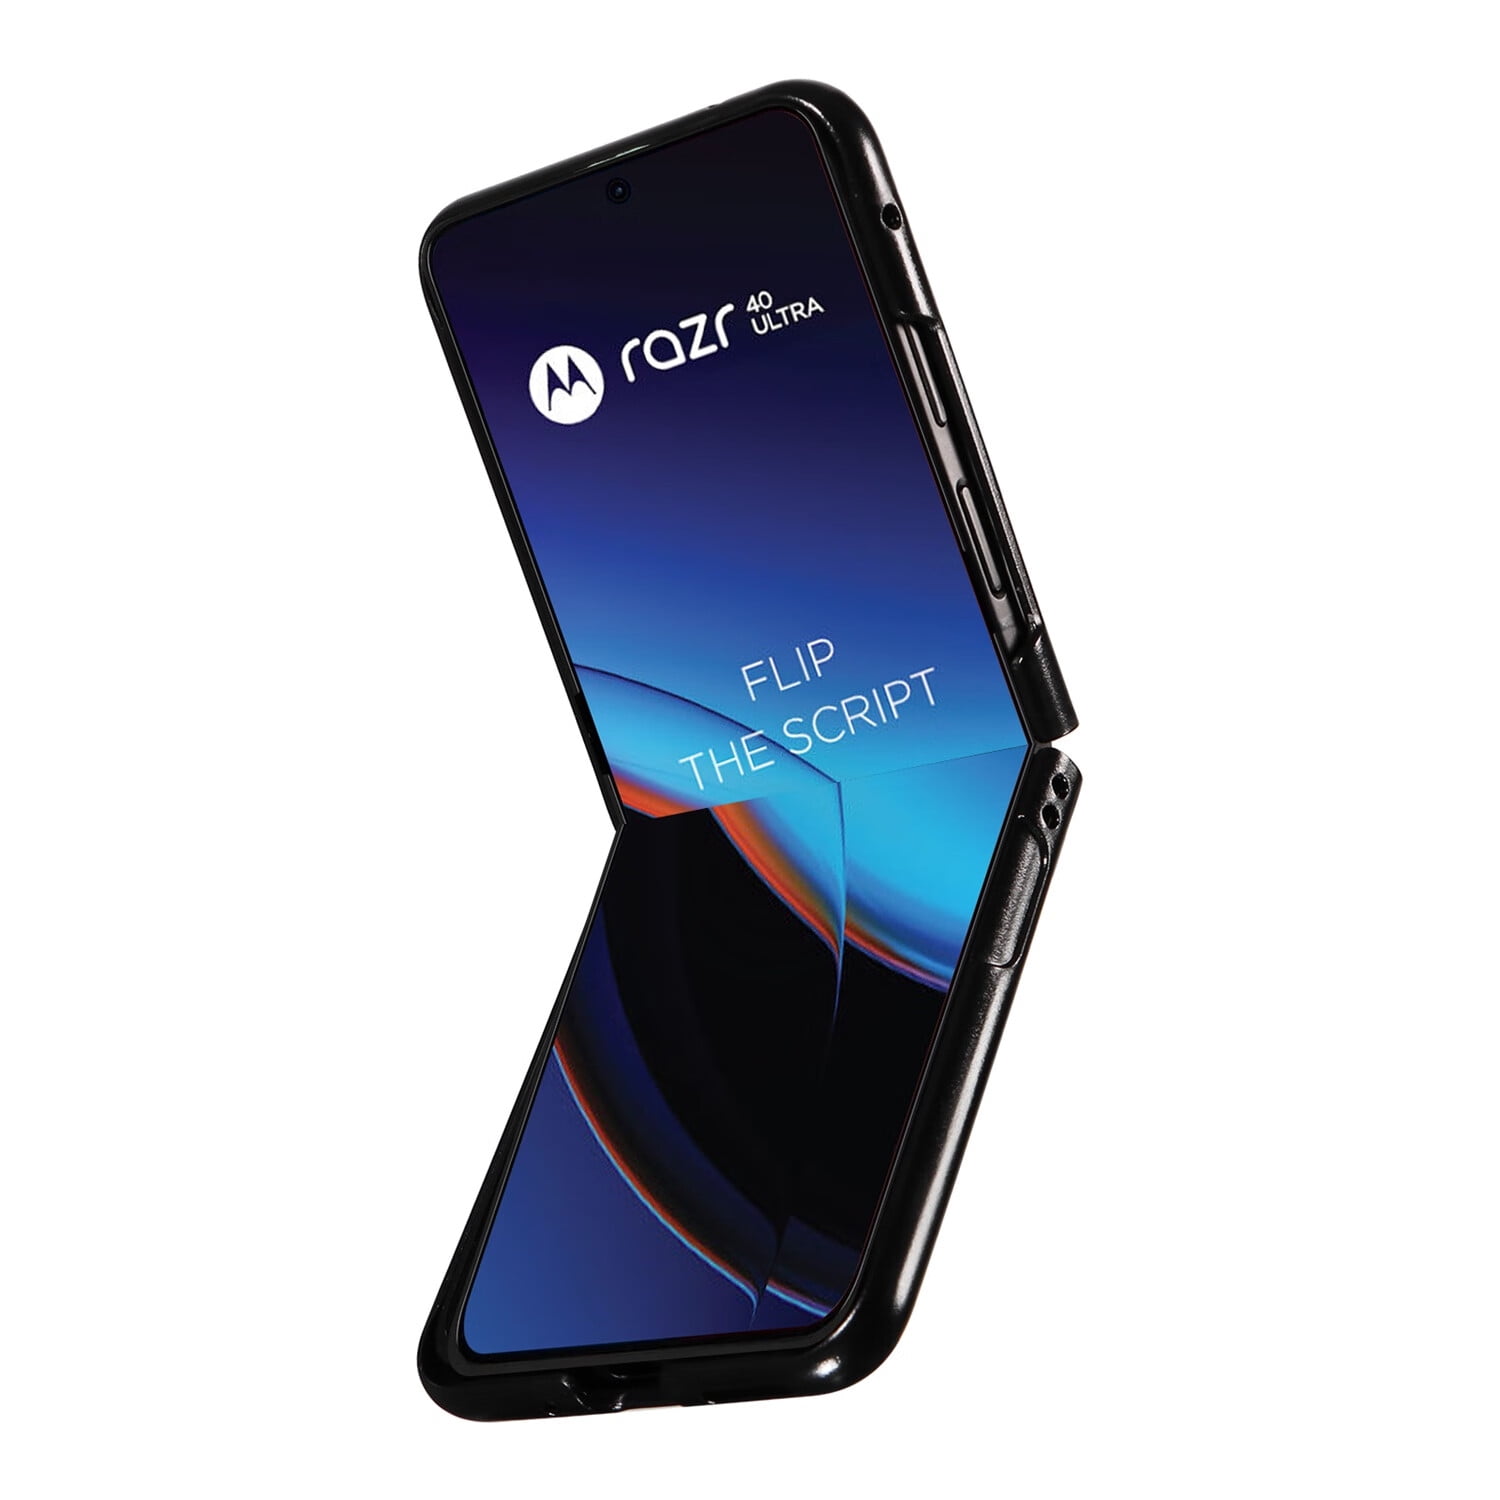 Motorola Razr 40 Ultra Review: A Game-Changing Foldable